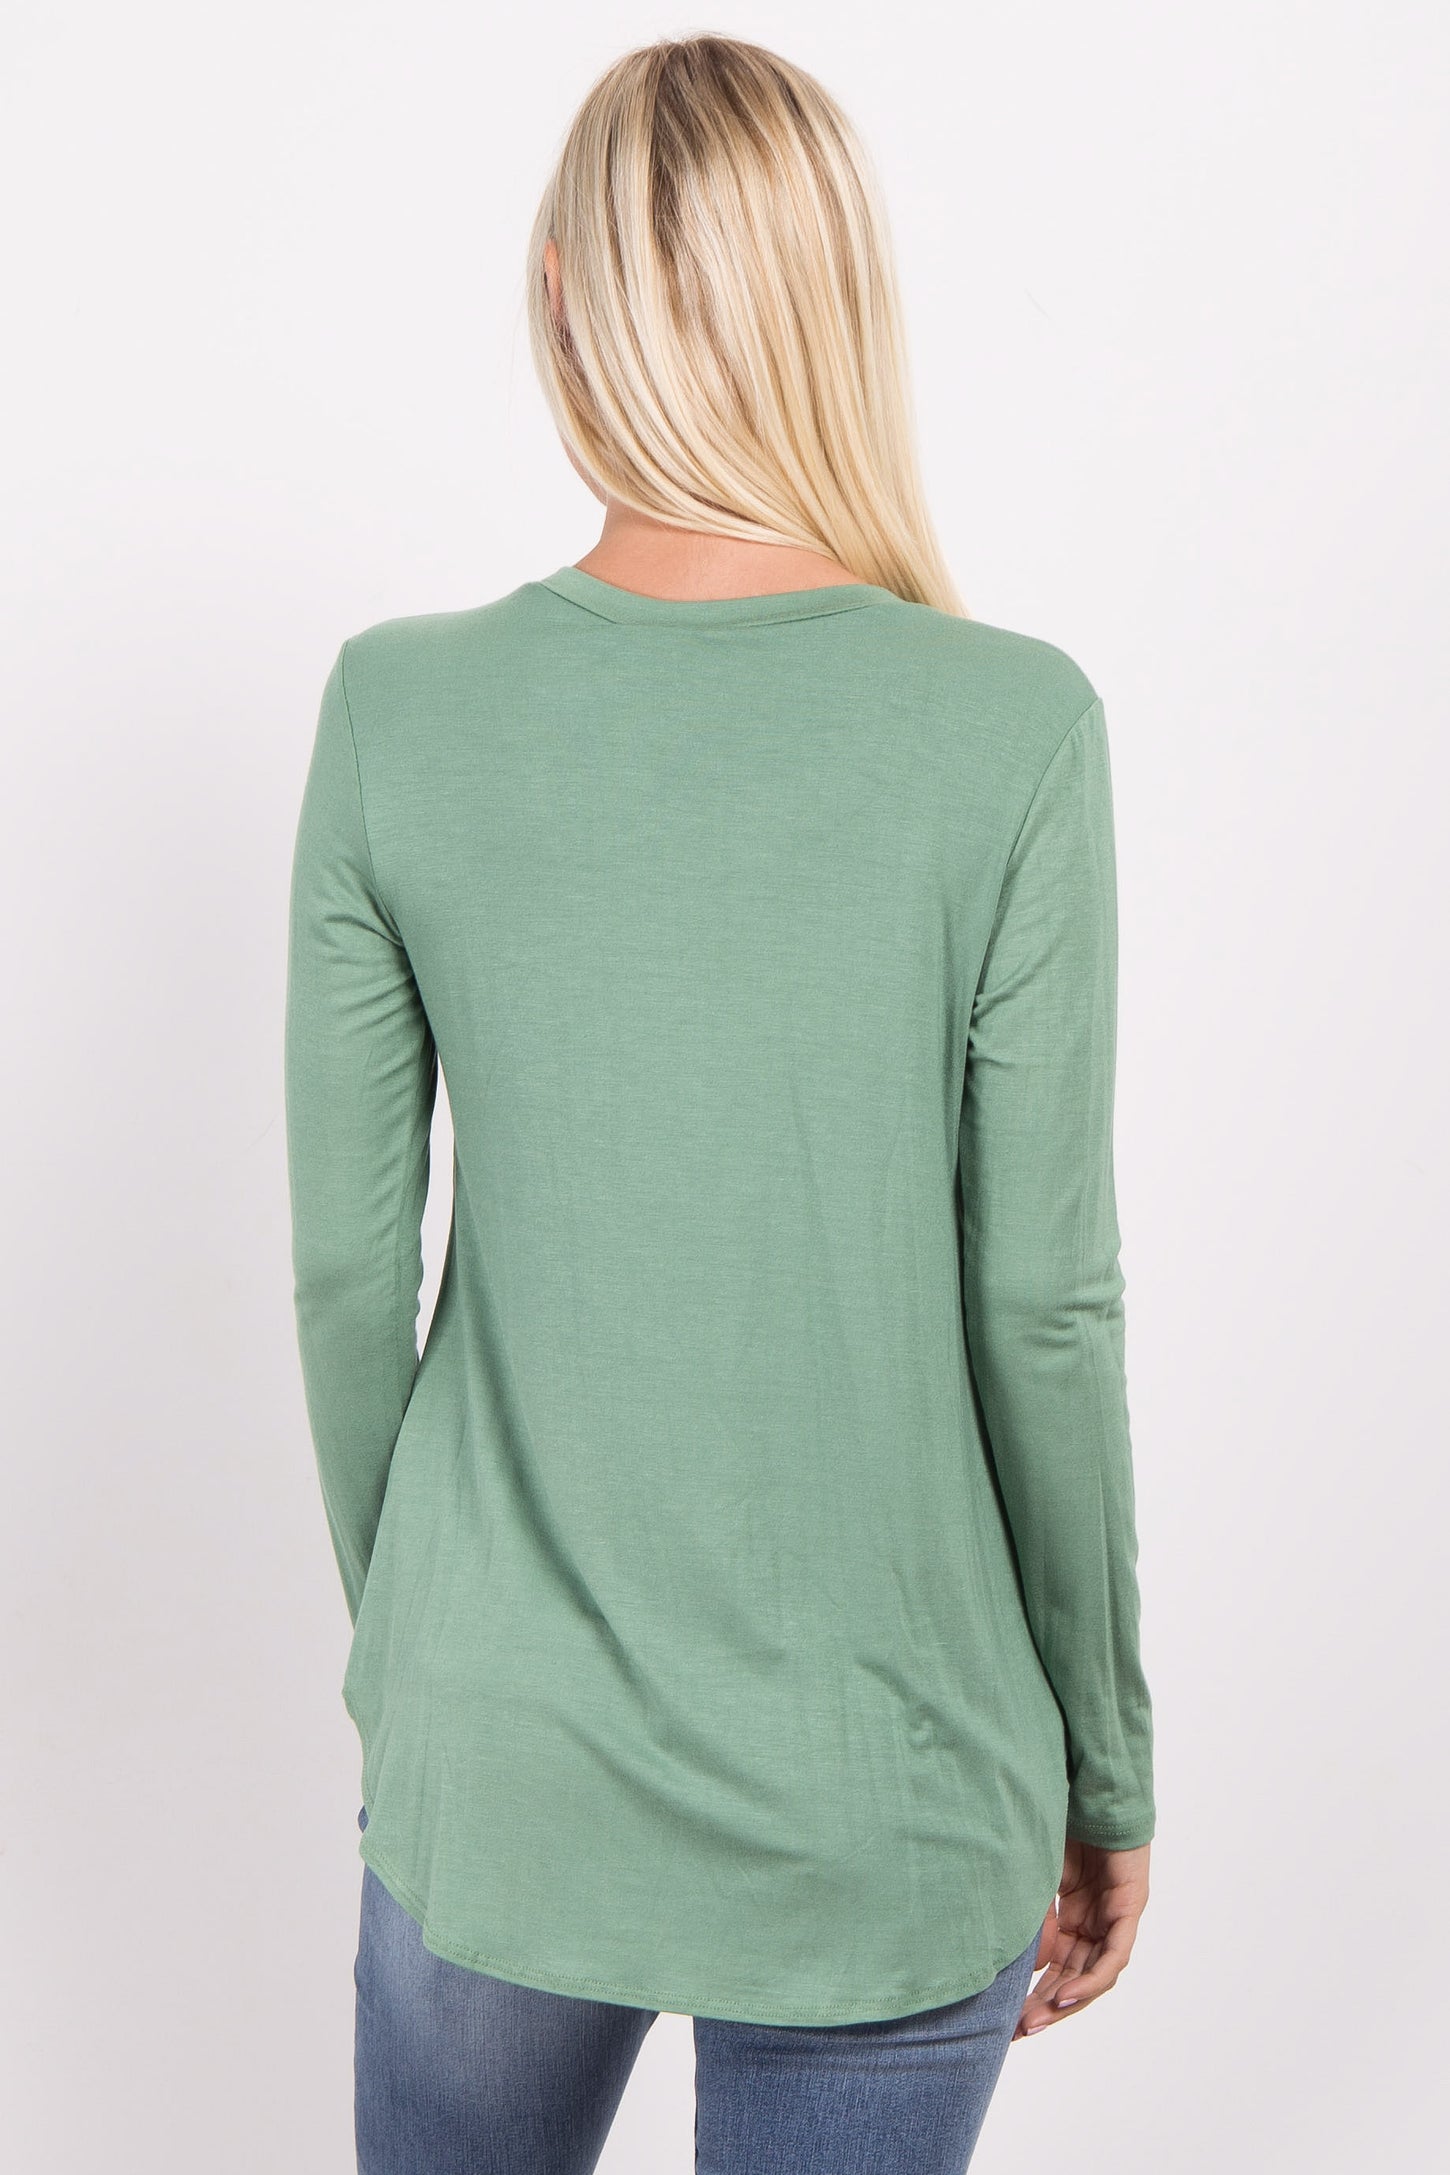 Green Basic Long Sleeve Top